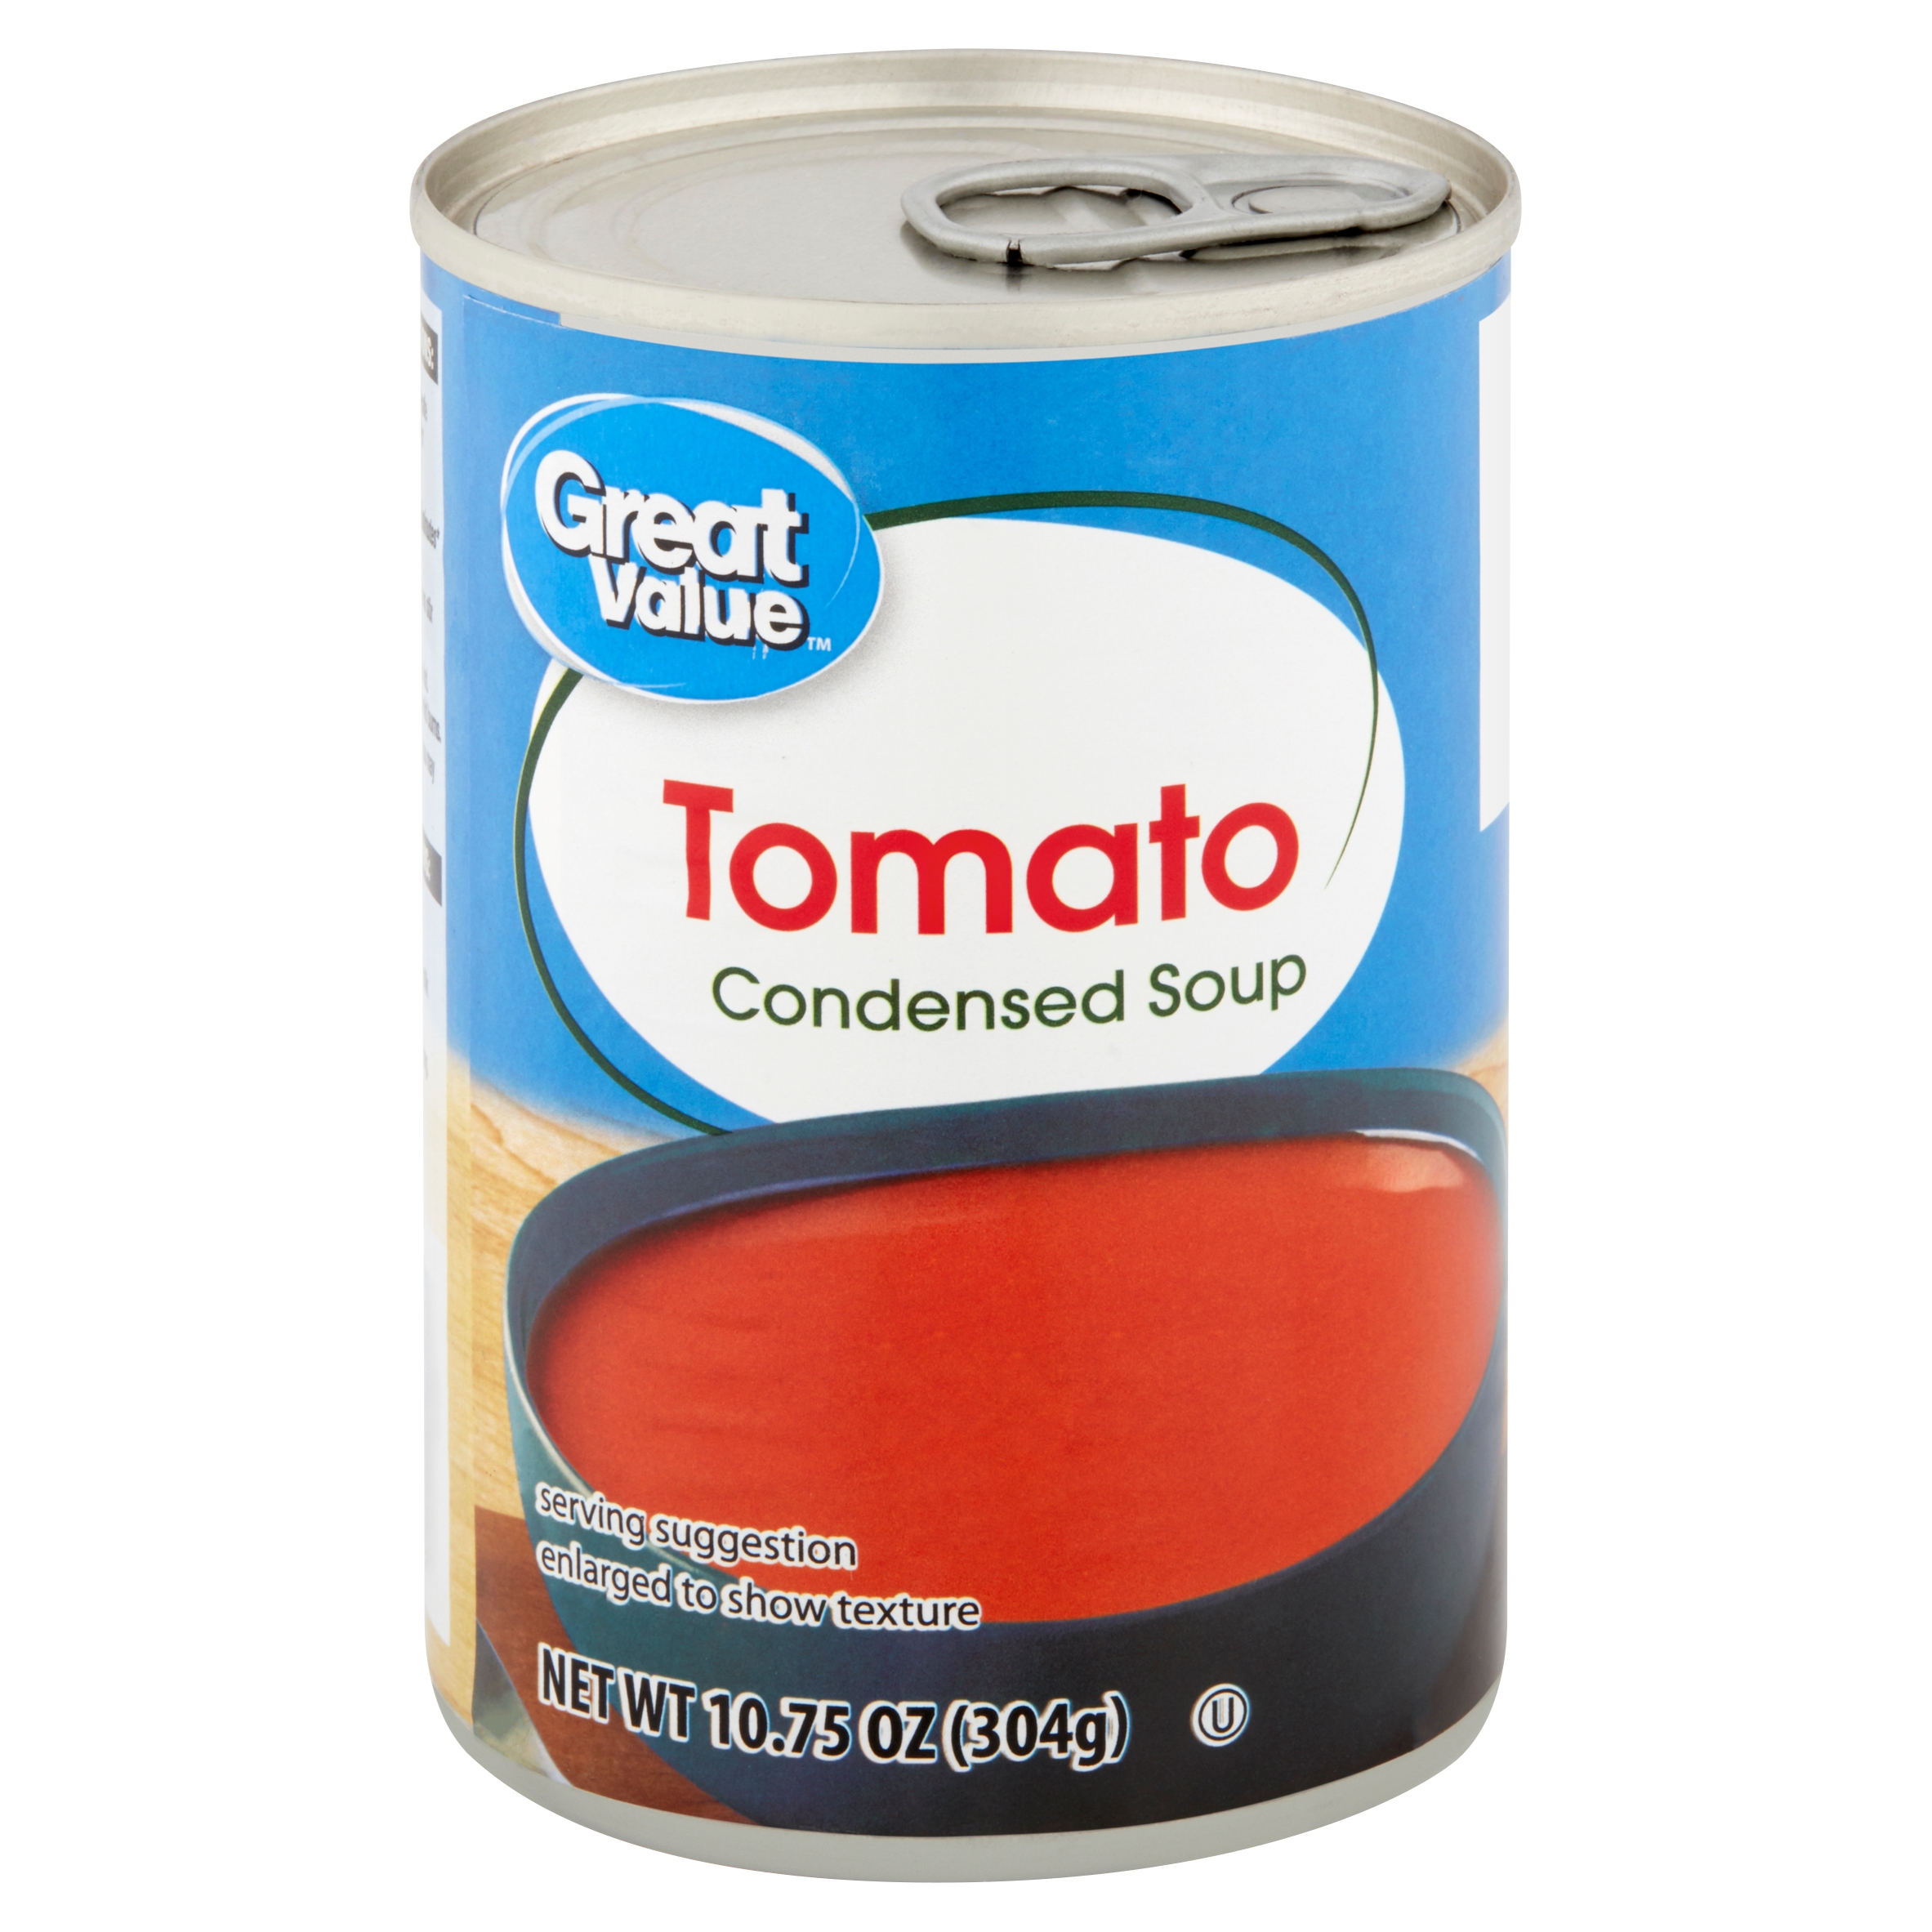 Great Value Tomato Condensed Soup, 10.75 Oz Image